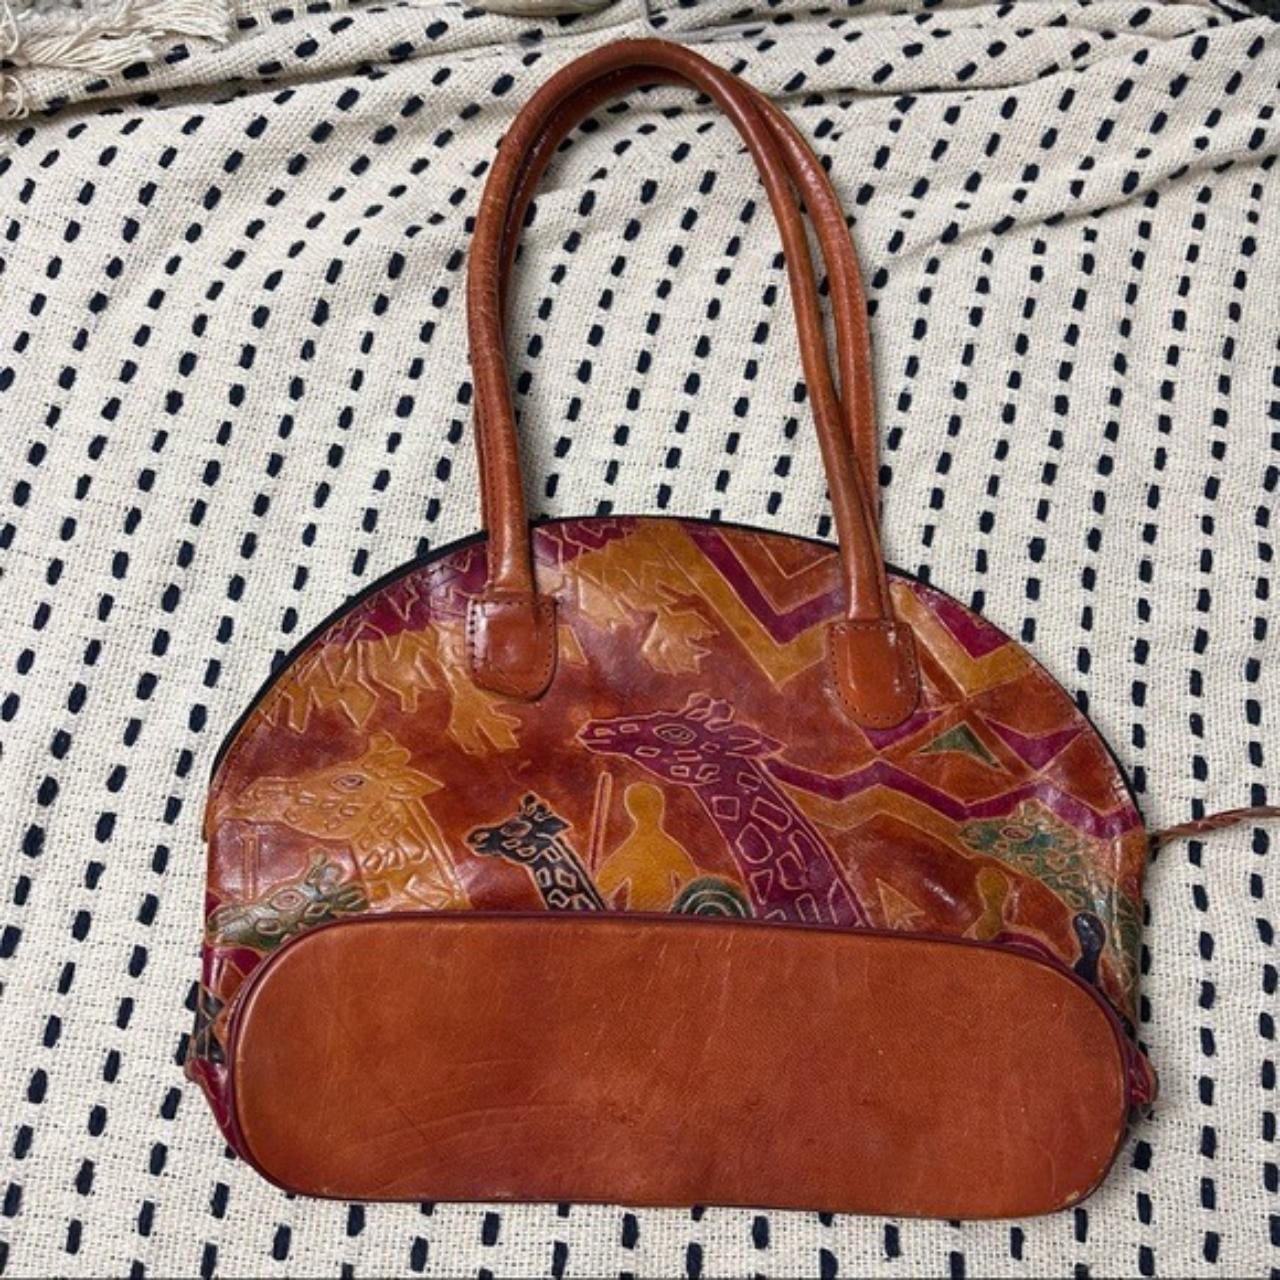 Antique/ Vintage leather JE handbag, purse, clutch | eBay